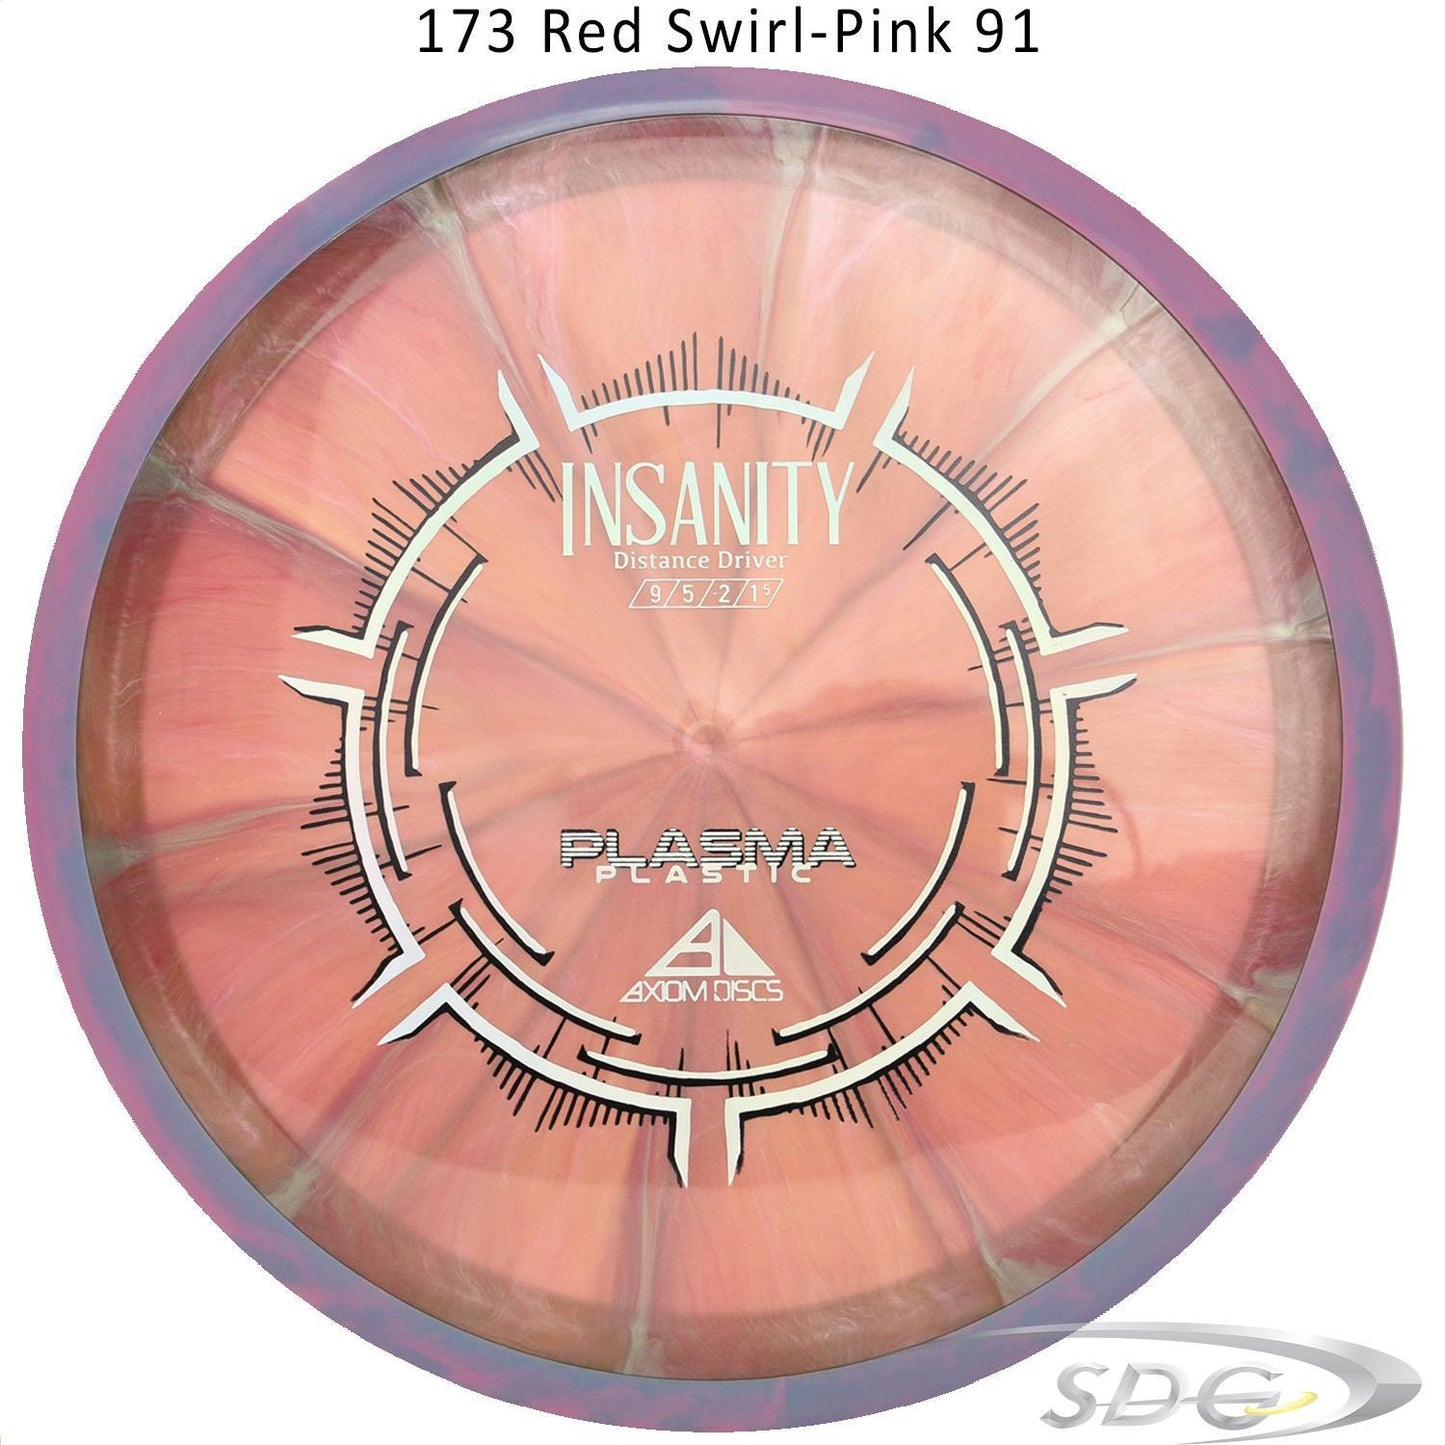 axiom-plasma-insanity-disc-golf-distance-driver 173 Red Swirl-Pink 91 